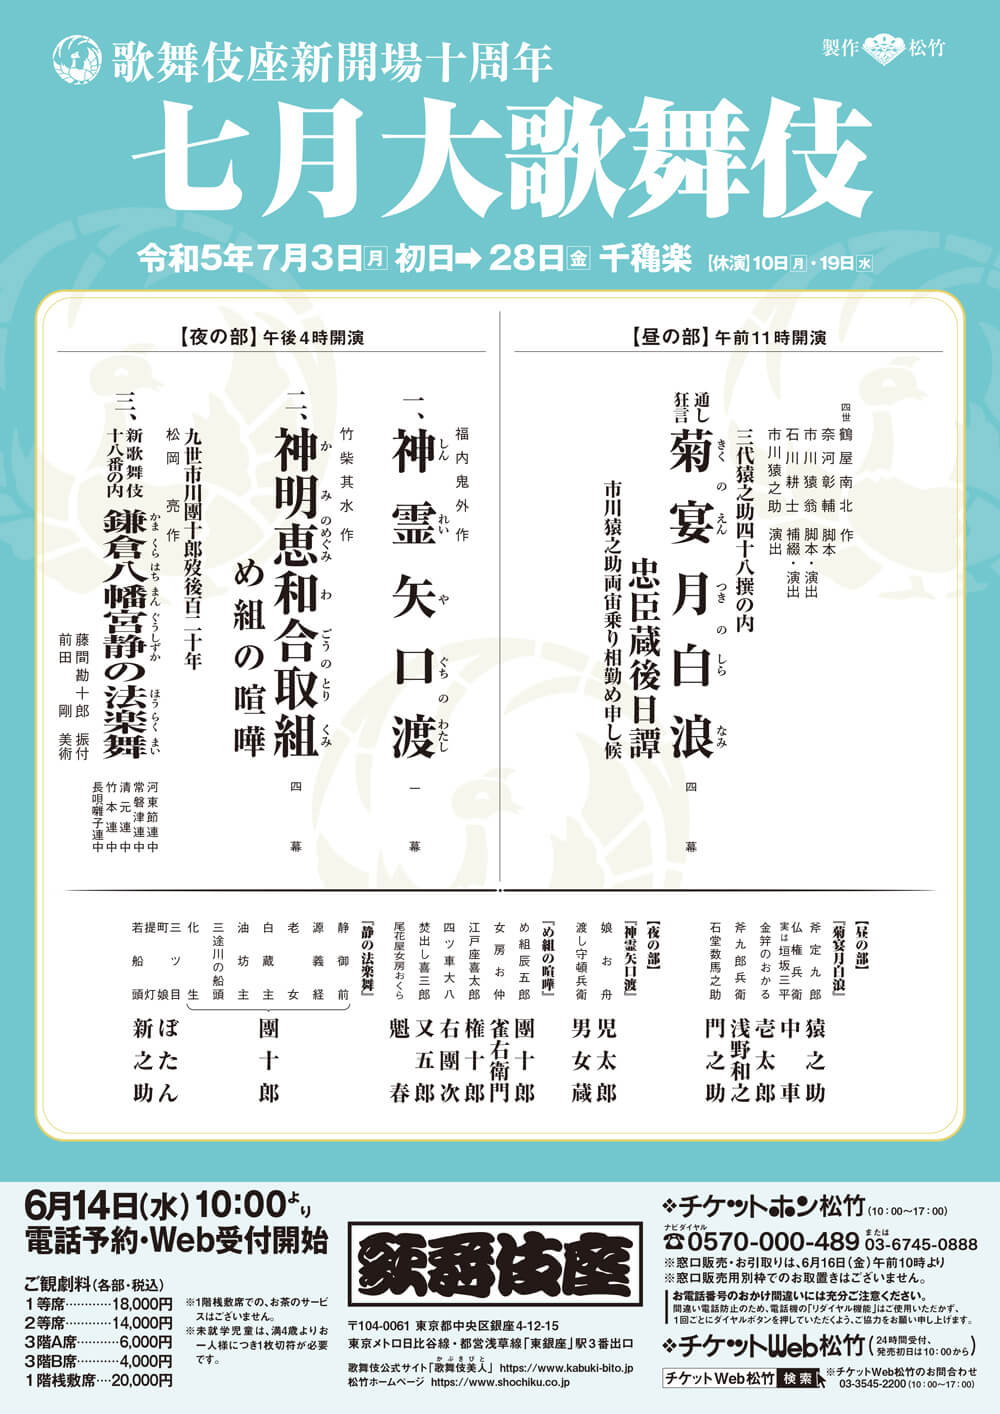 July Program at the Kabukiza Theatre